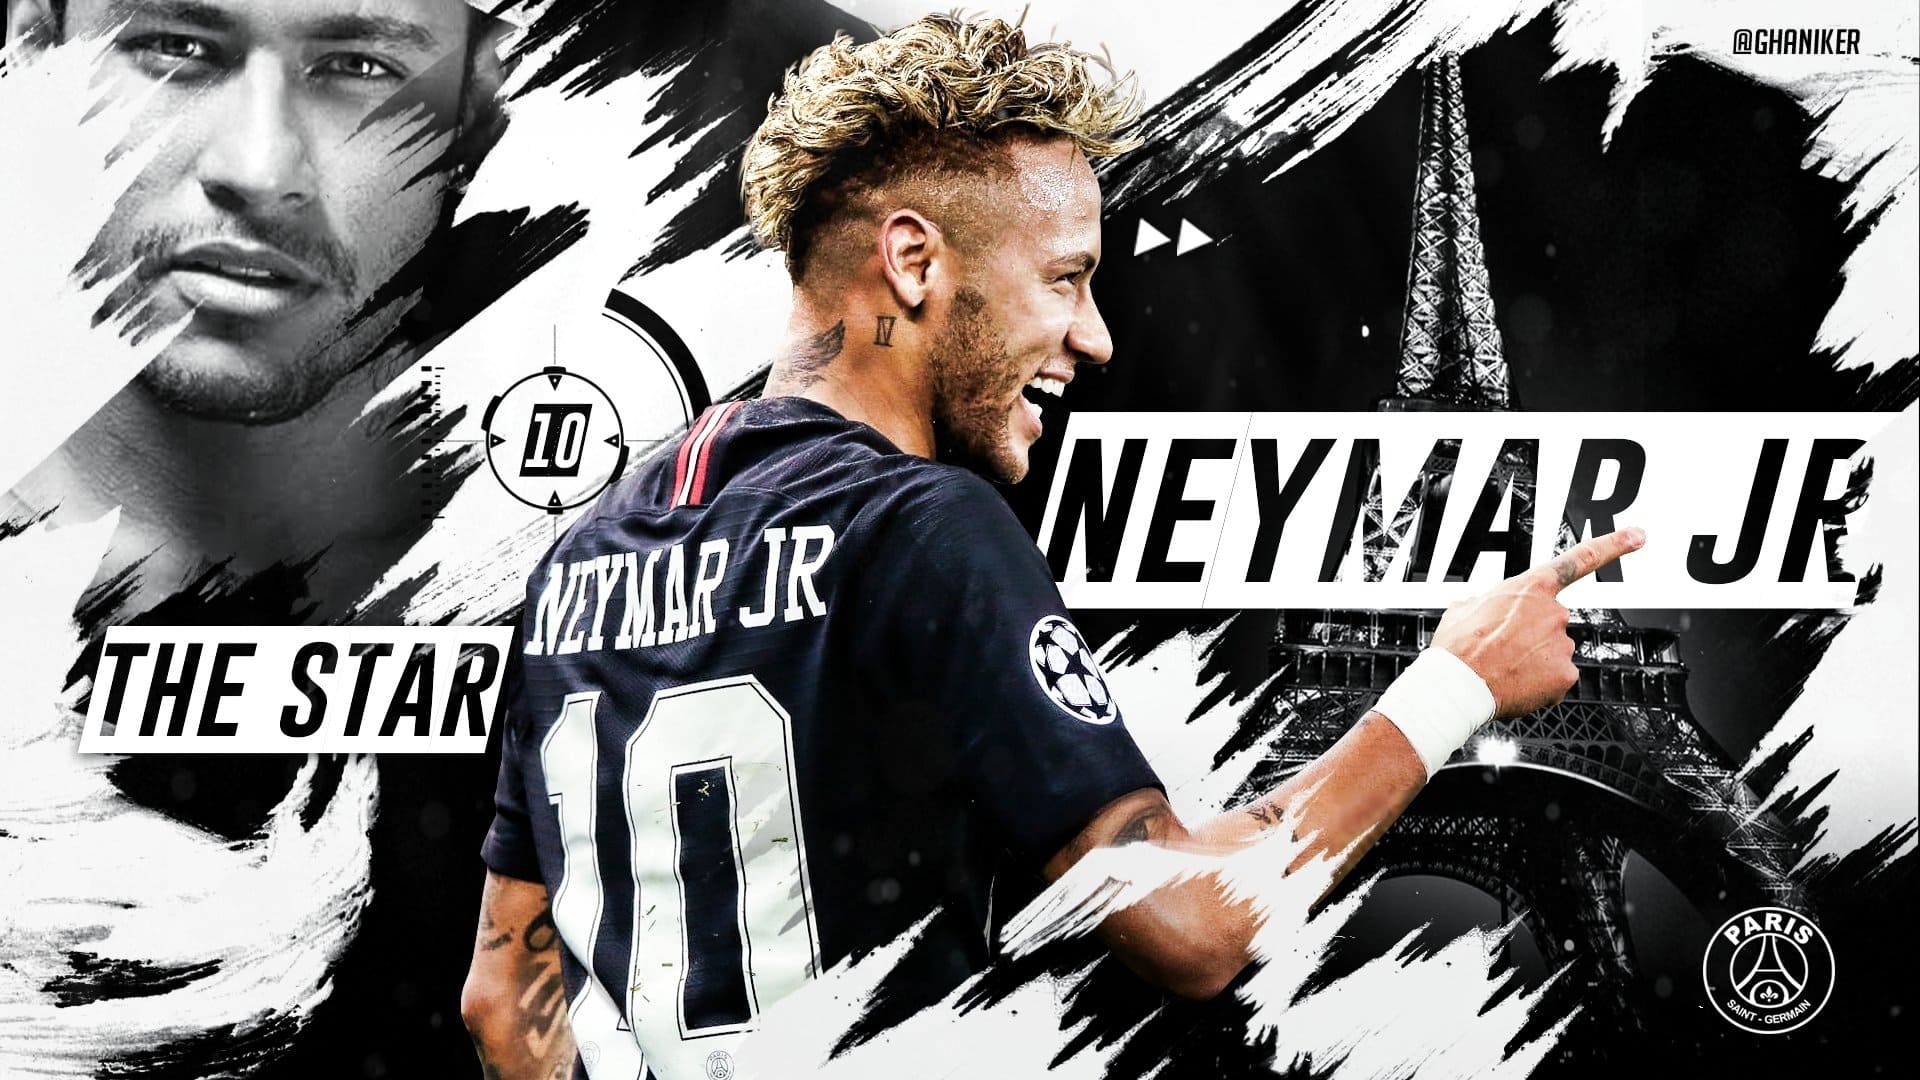 Neymar PC Wallpaper To Download Full Size PC Wallpaper